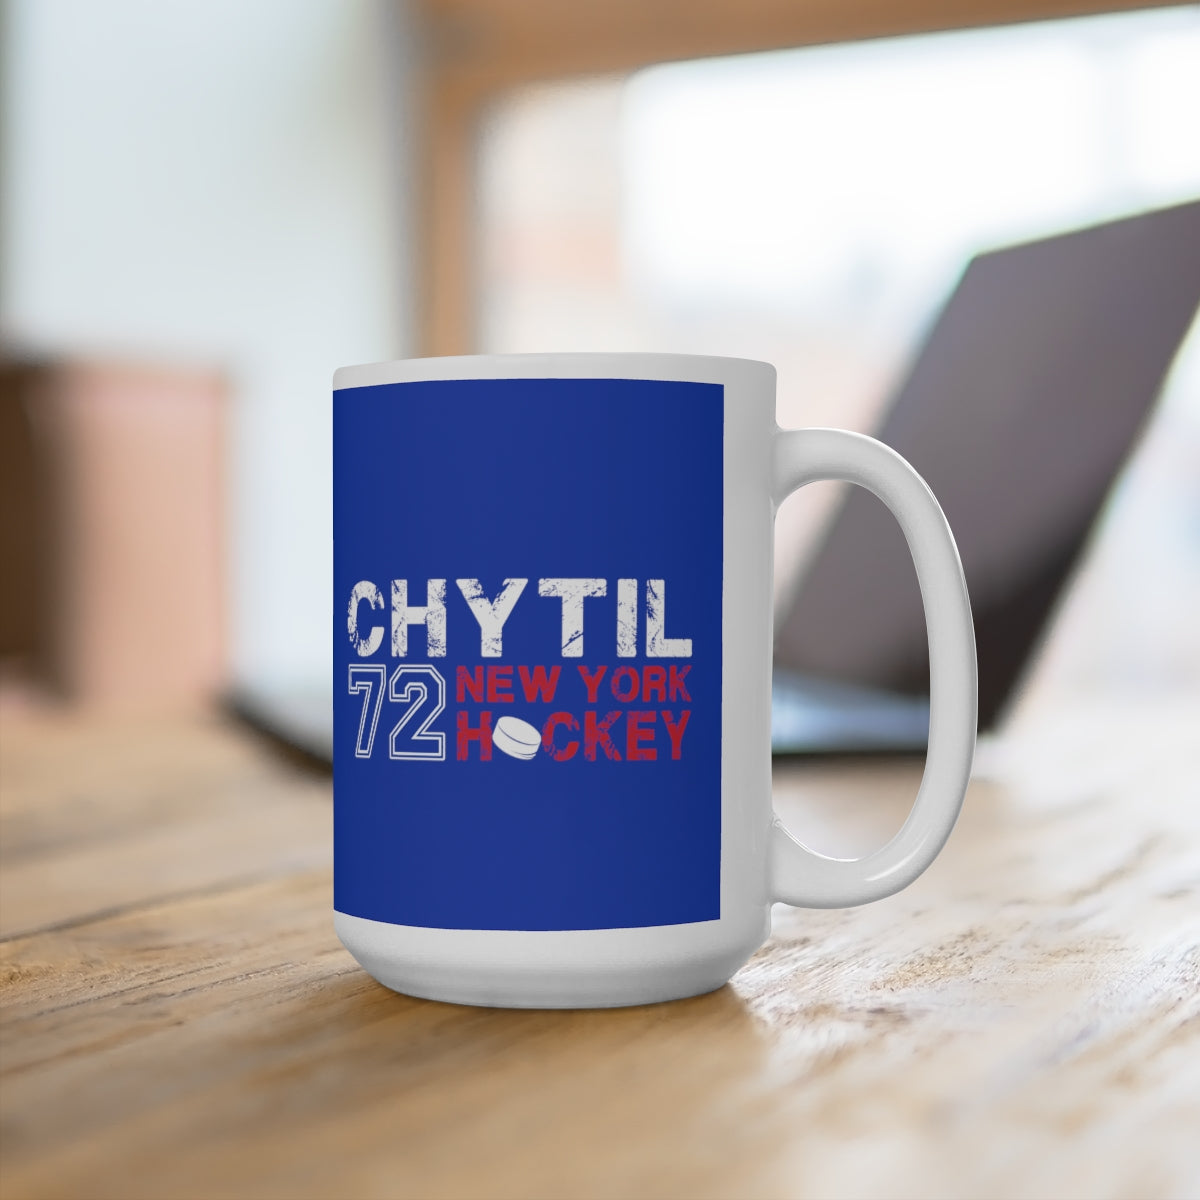 Chytil 72 New York Hockey Ceramic Coffee Mug In Blue, 15oz